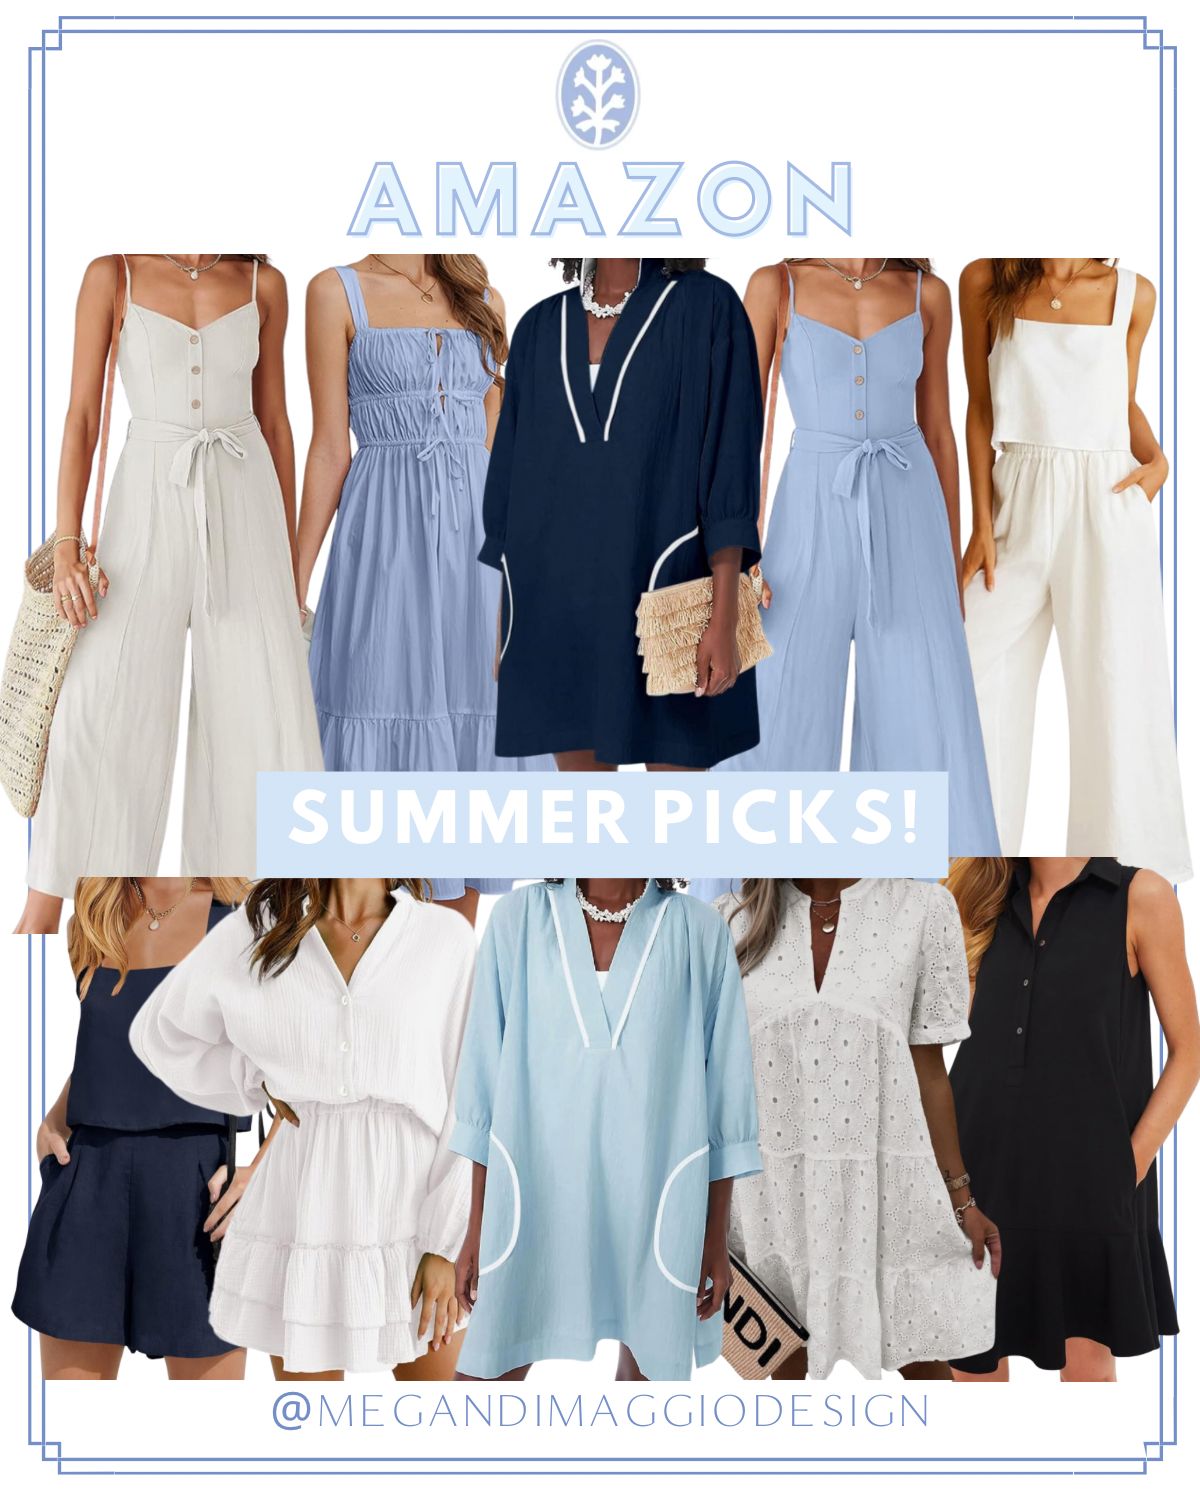 Megan DiMaggio Design's Amazon Page | Amazon (US)